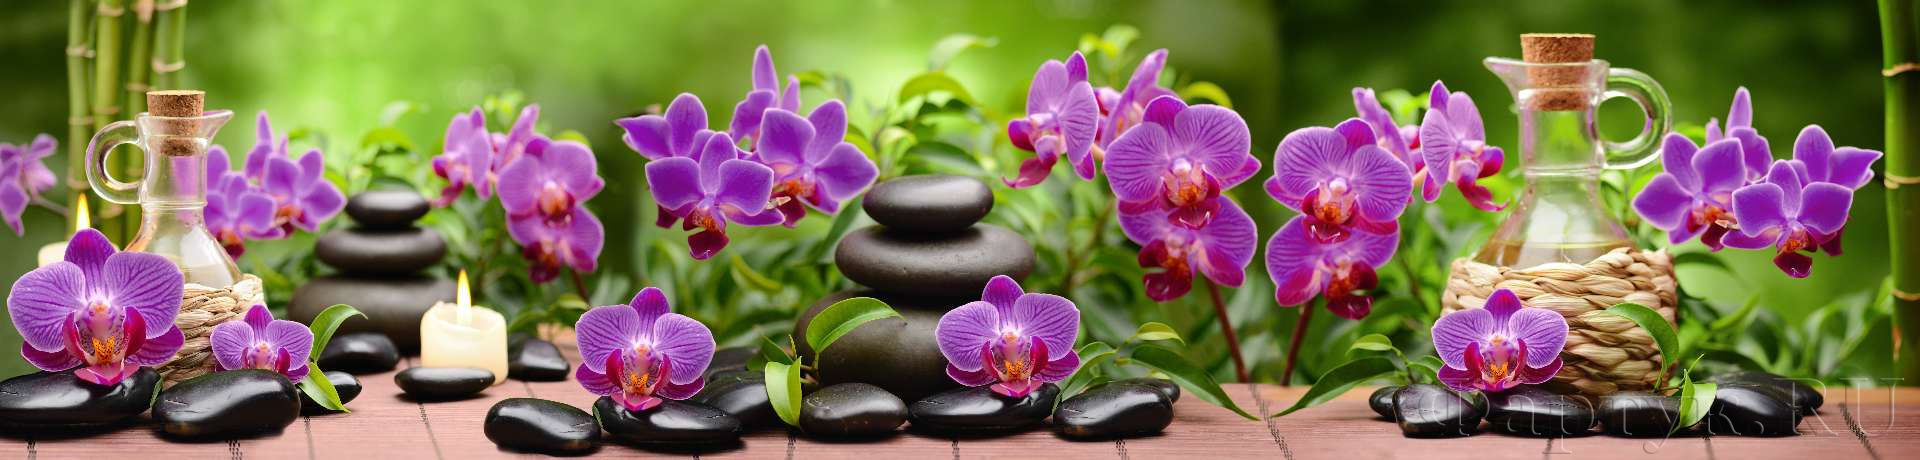 Фиолетовые орхидеи, камни спа